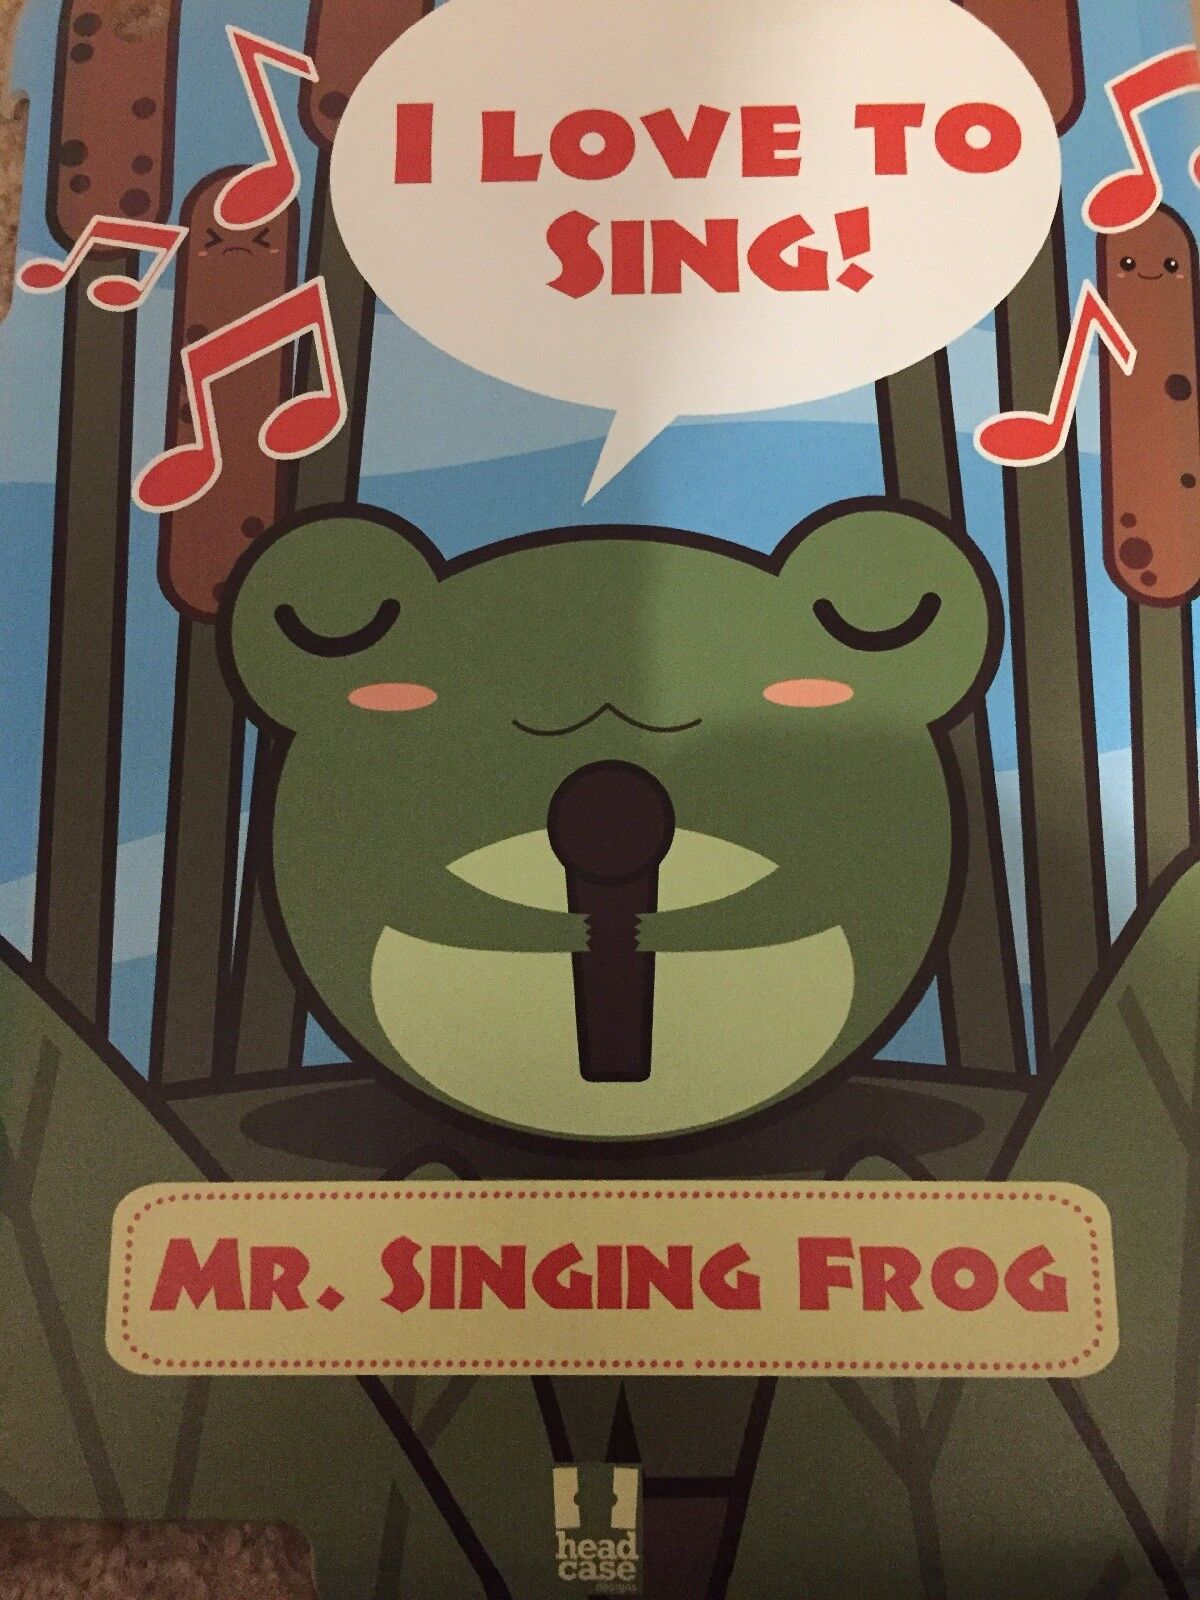 HEAD CASE DESIGNS Mr. Singing Frog: I Love To Sing